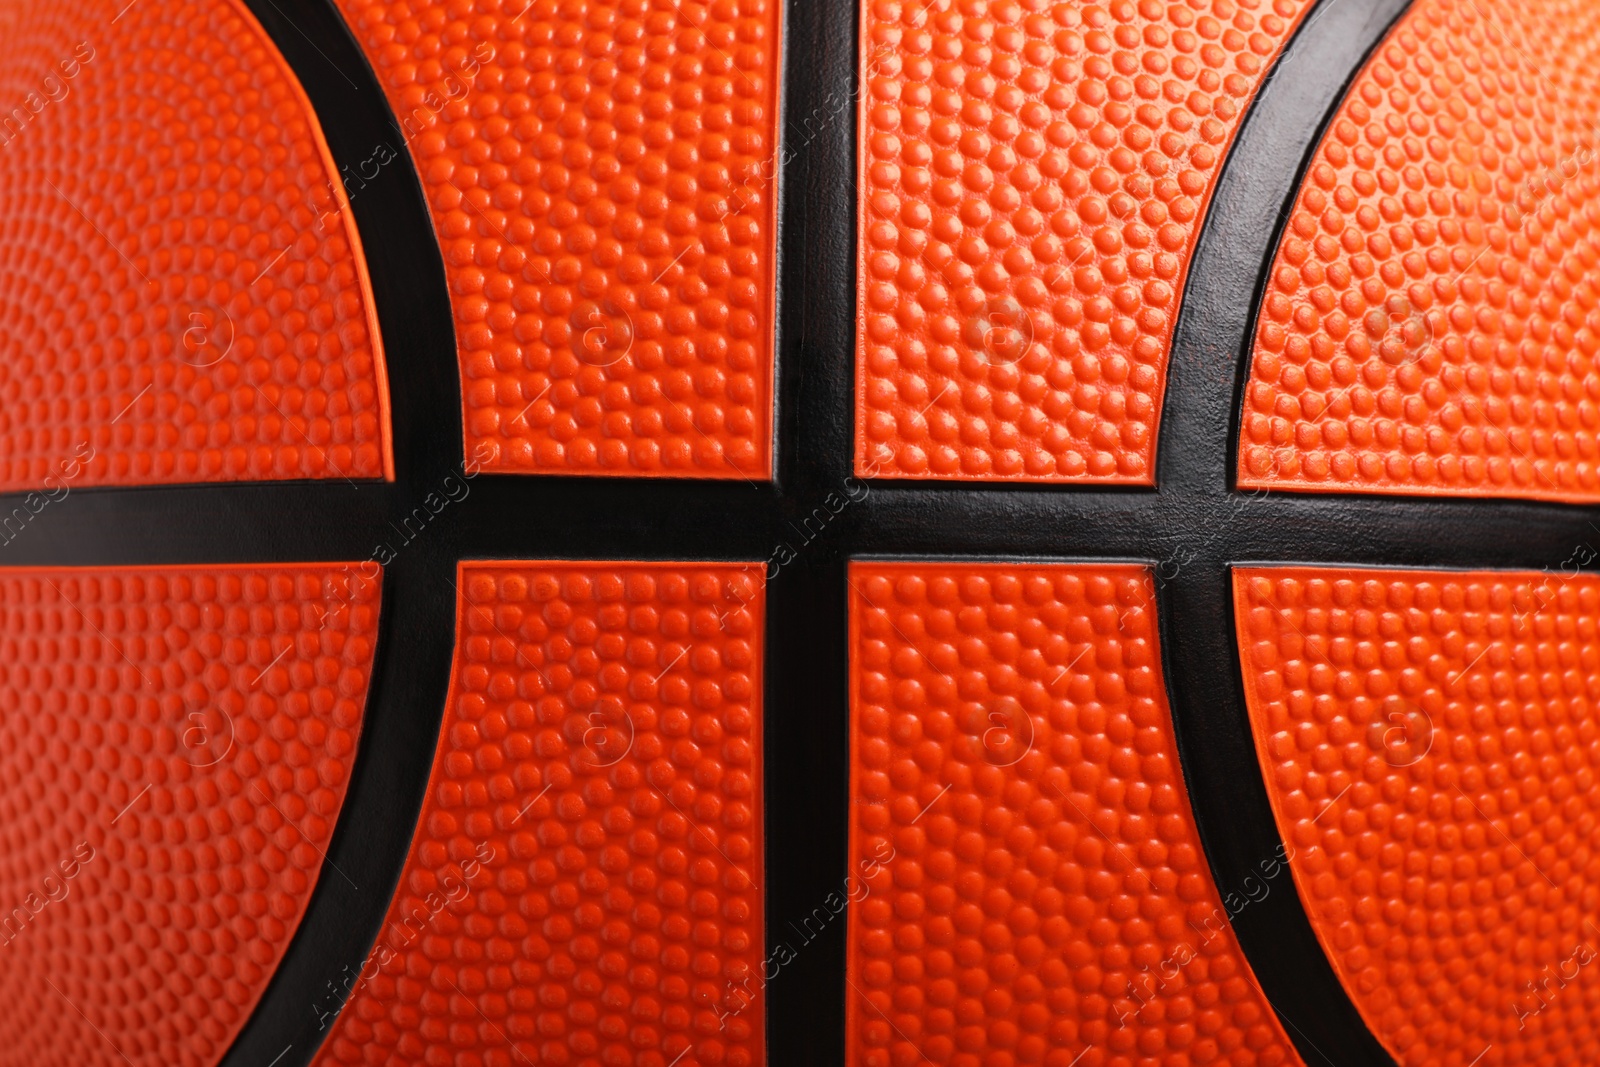 Photo of Orange basketball ball as background, closeup view